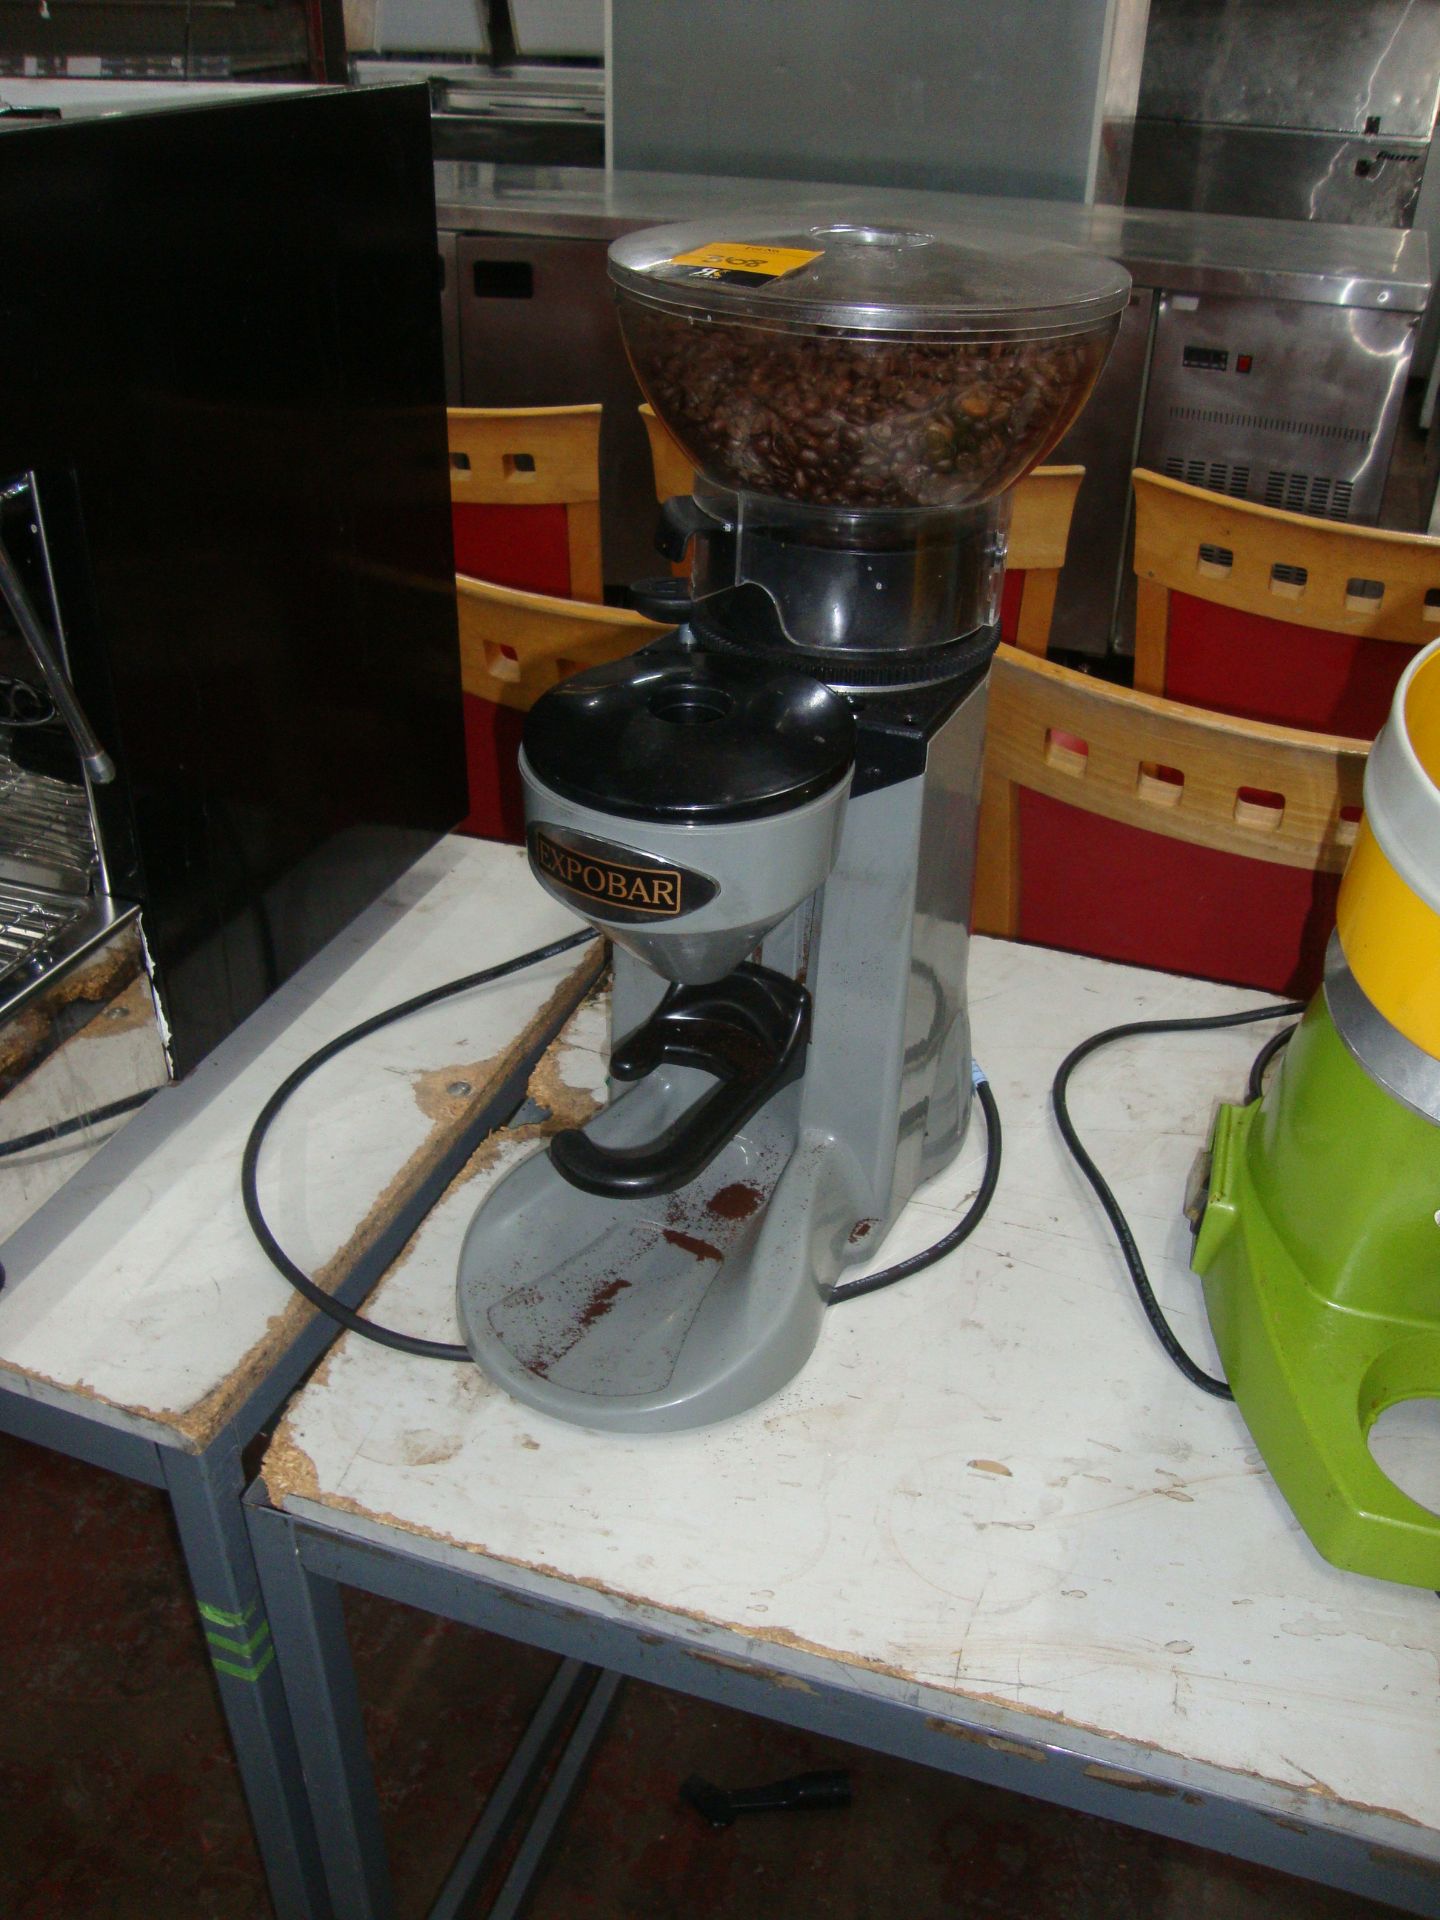 Expobar commercial coffee grinder model El Café TranquiloIMPORTANT: Please remember goods